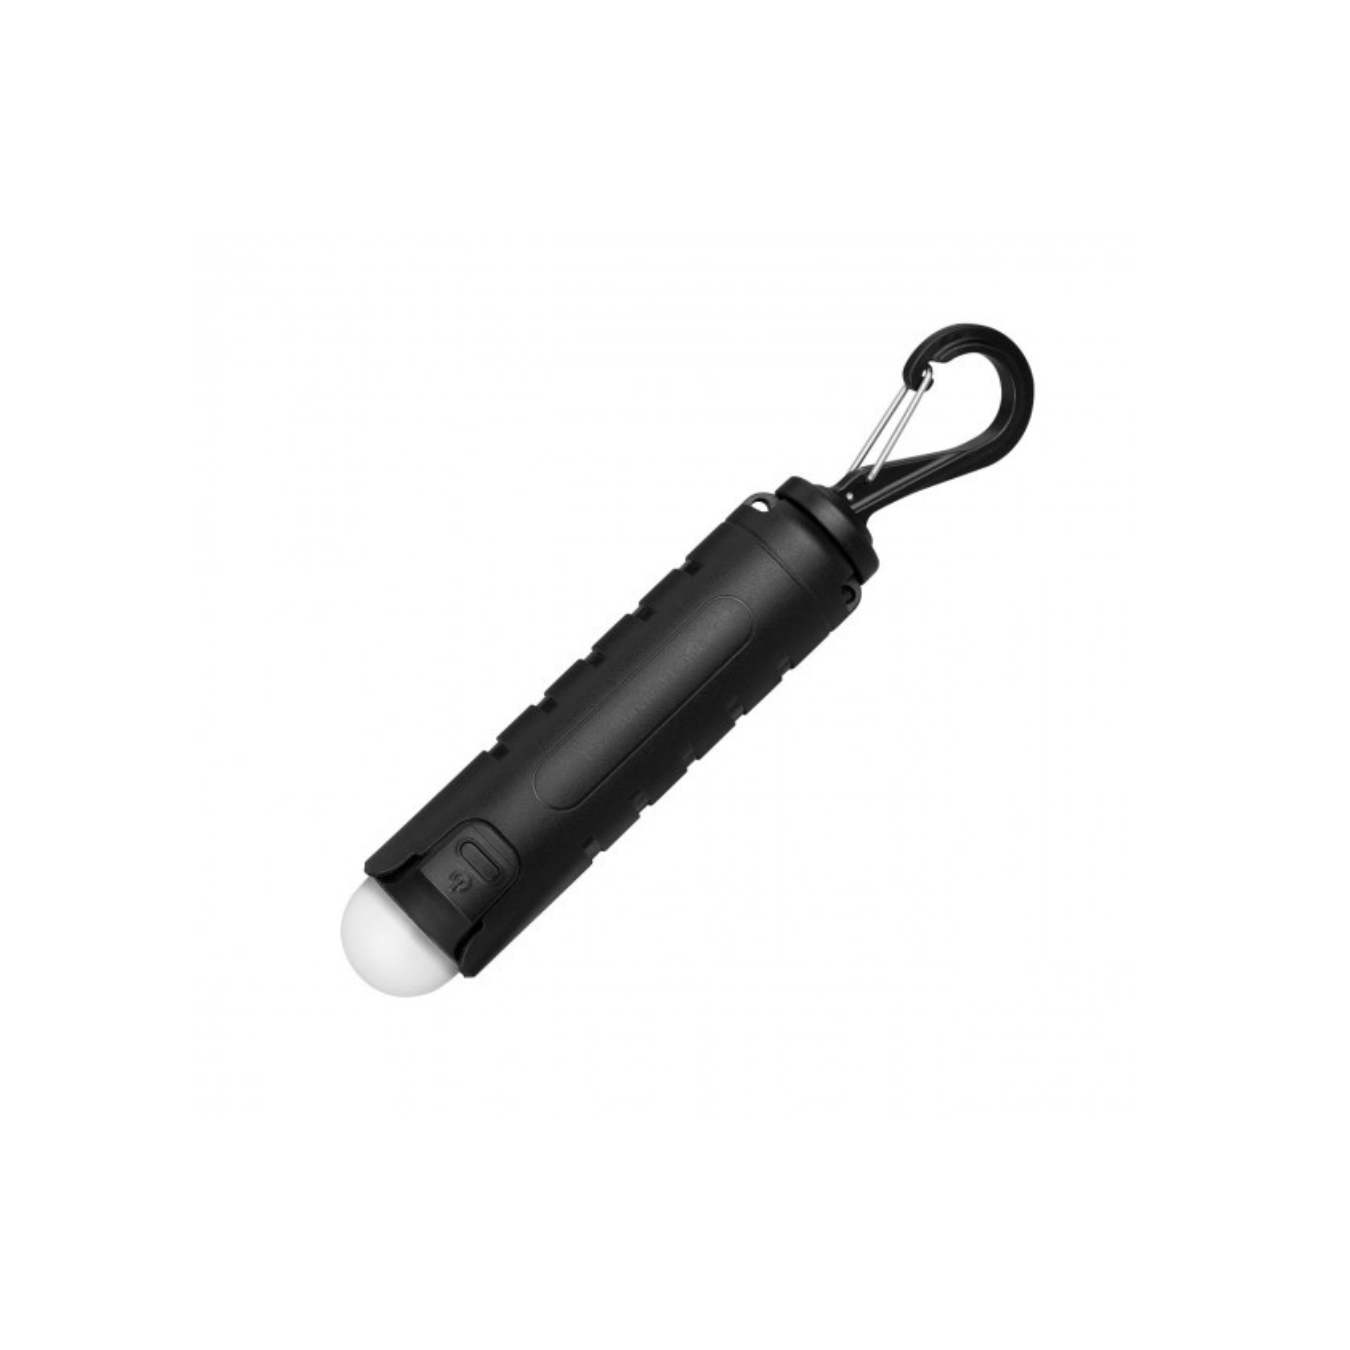 ThruNite TS2 Self-rescue NW 21700 Portable Lantern Flashlight